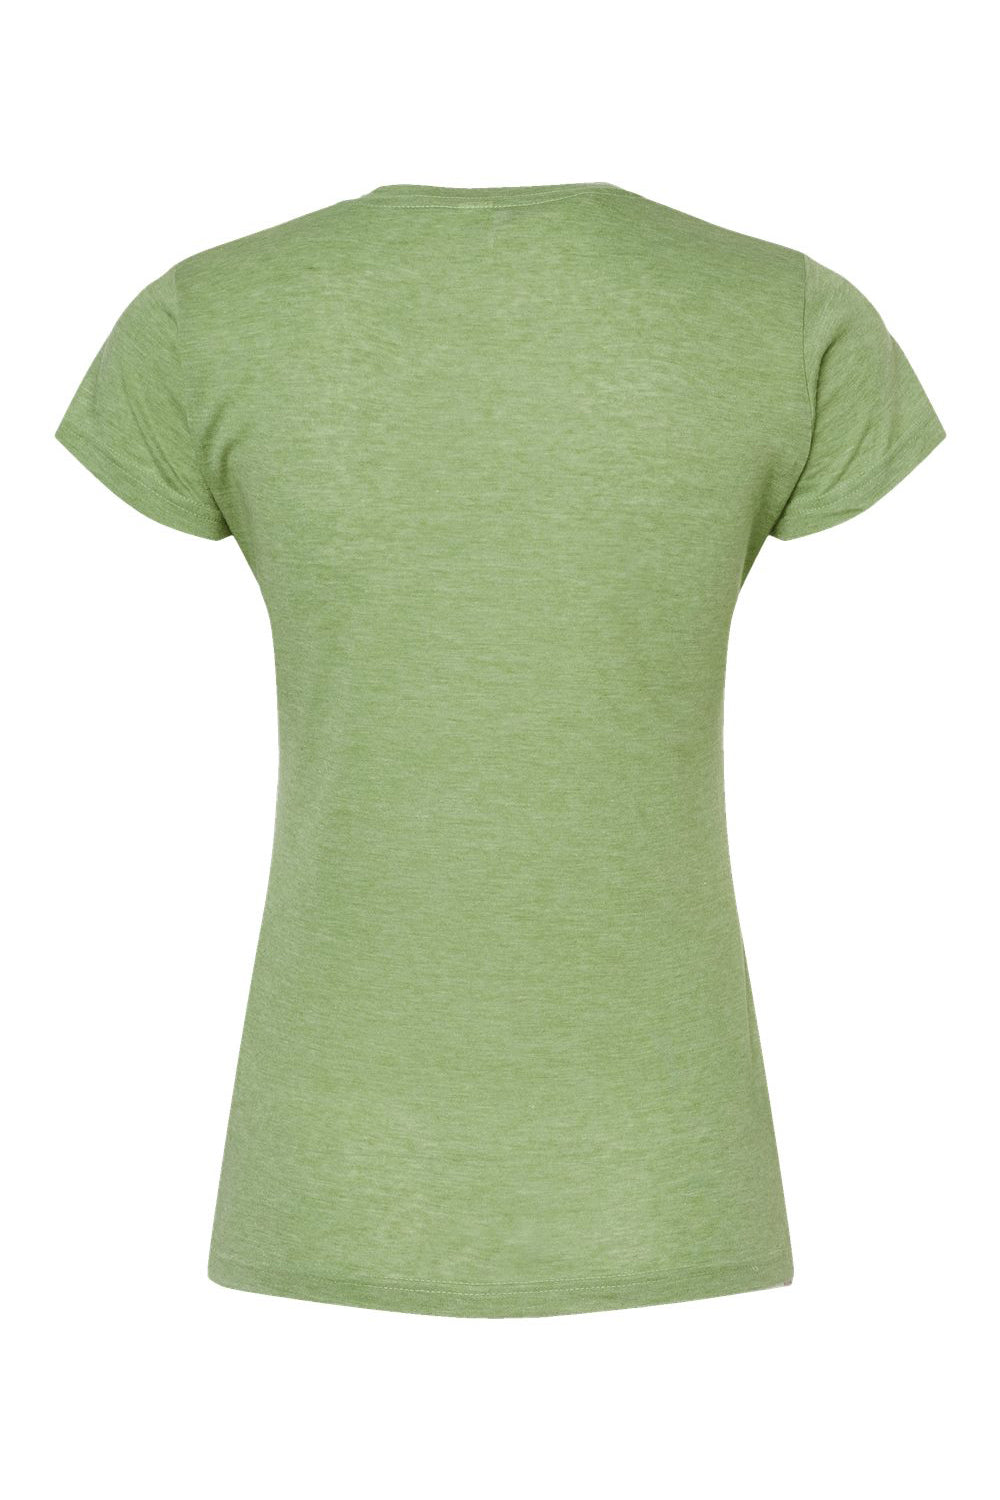 Tultex 240 Womens Poly-Rich Short Sleeve Crewneck T-Shirt Heather Green Flat Back